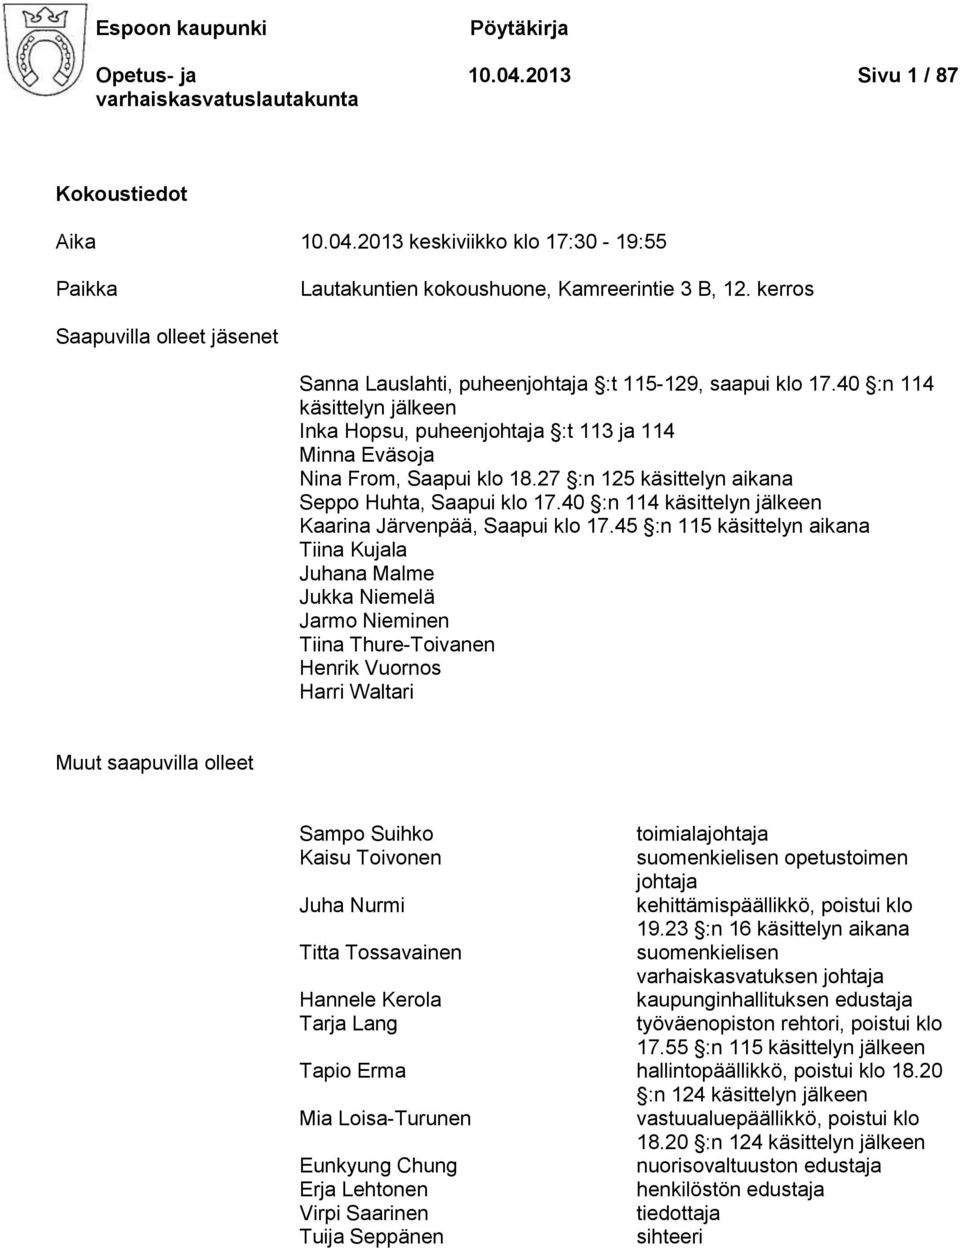 27 :n 125 käsittelyn aikana Seppo Huhta, Saapui klo 17.40 :n 114 käsittelyn jälkeen Kaarina Järvenpää, Saapui klo 17.